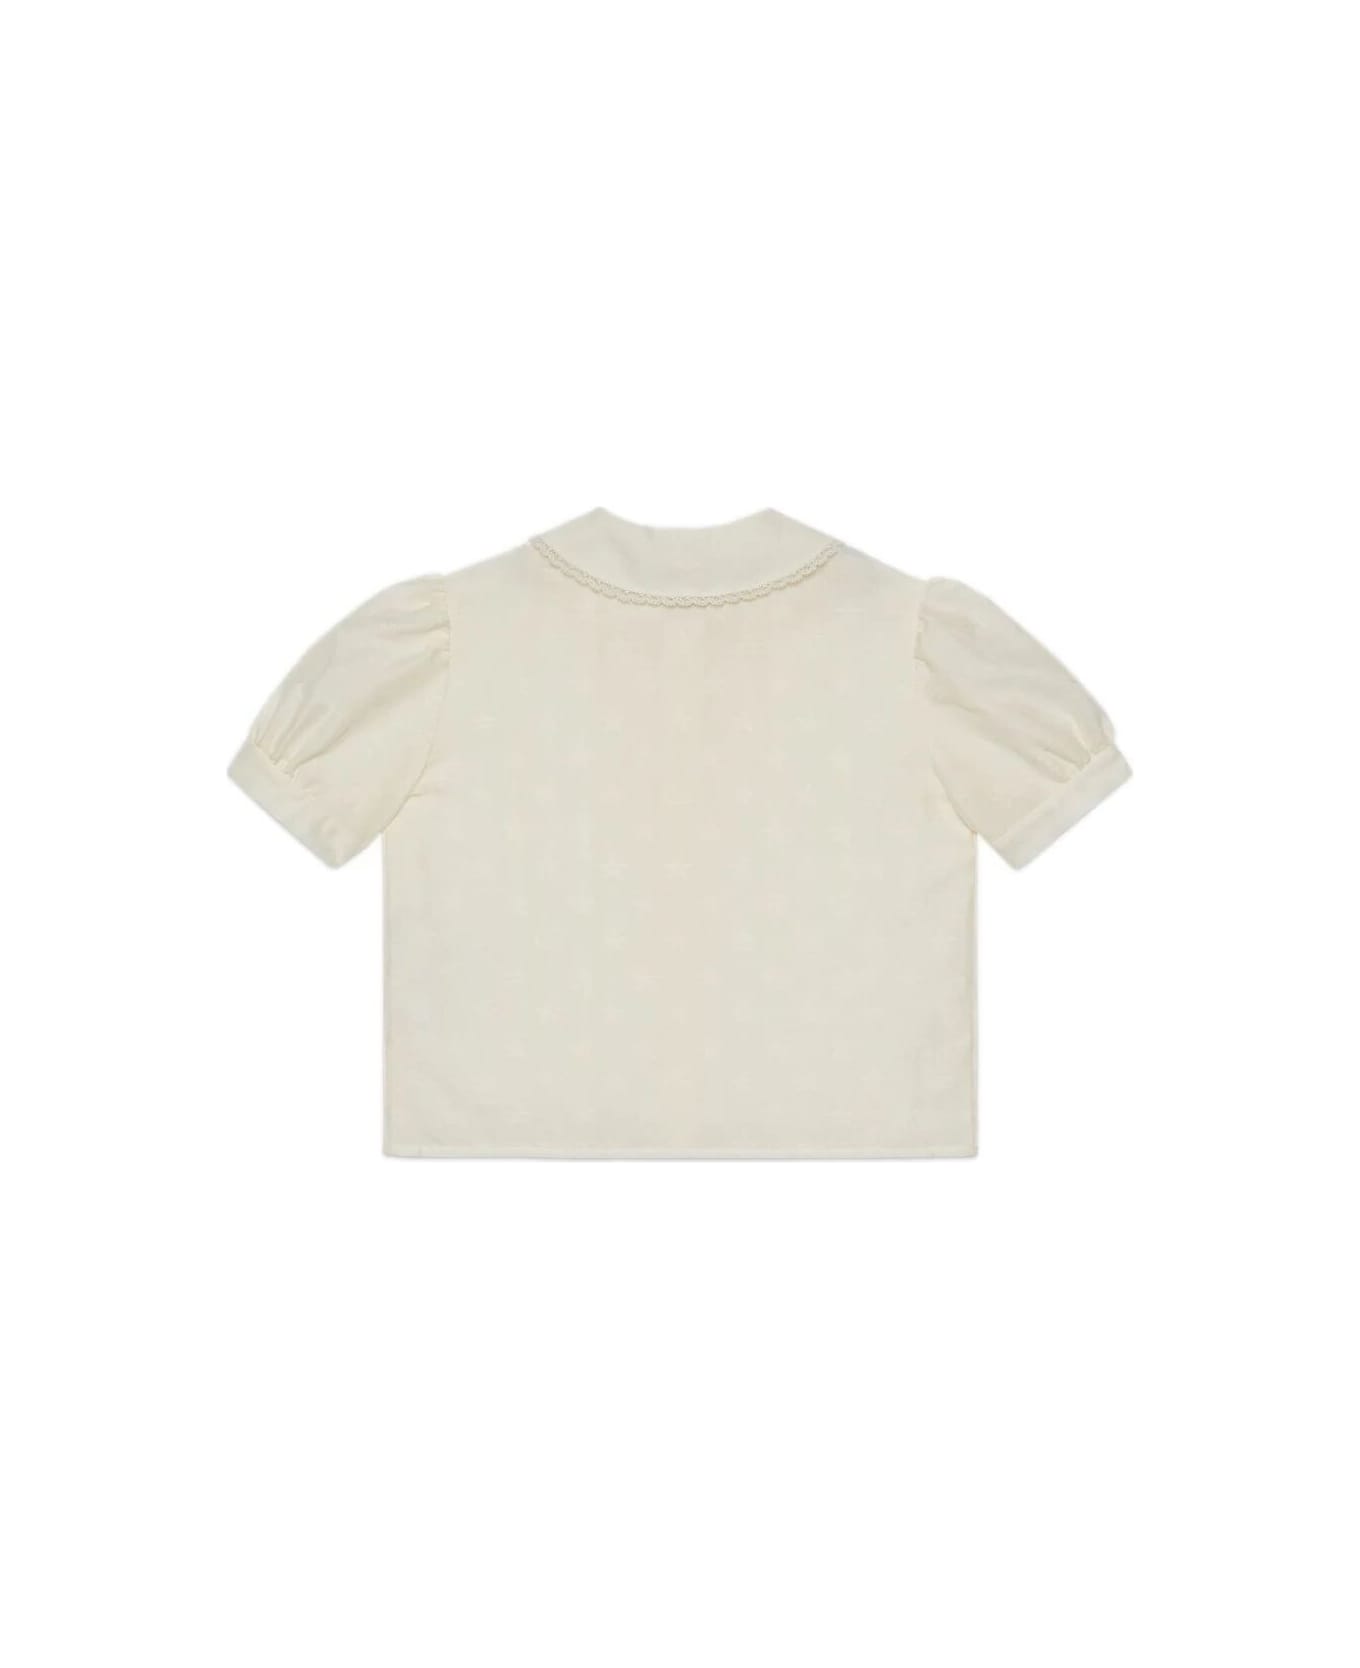 Gucci Schal Shirt Multistar Cotton Jaquard - Ivory